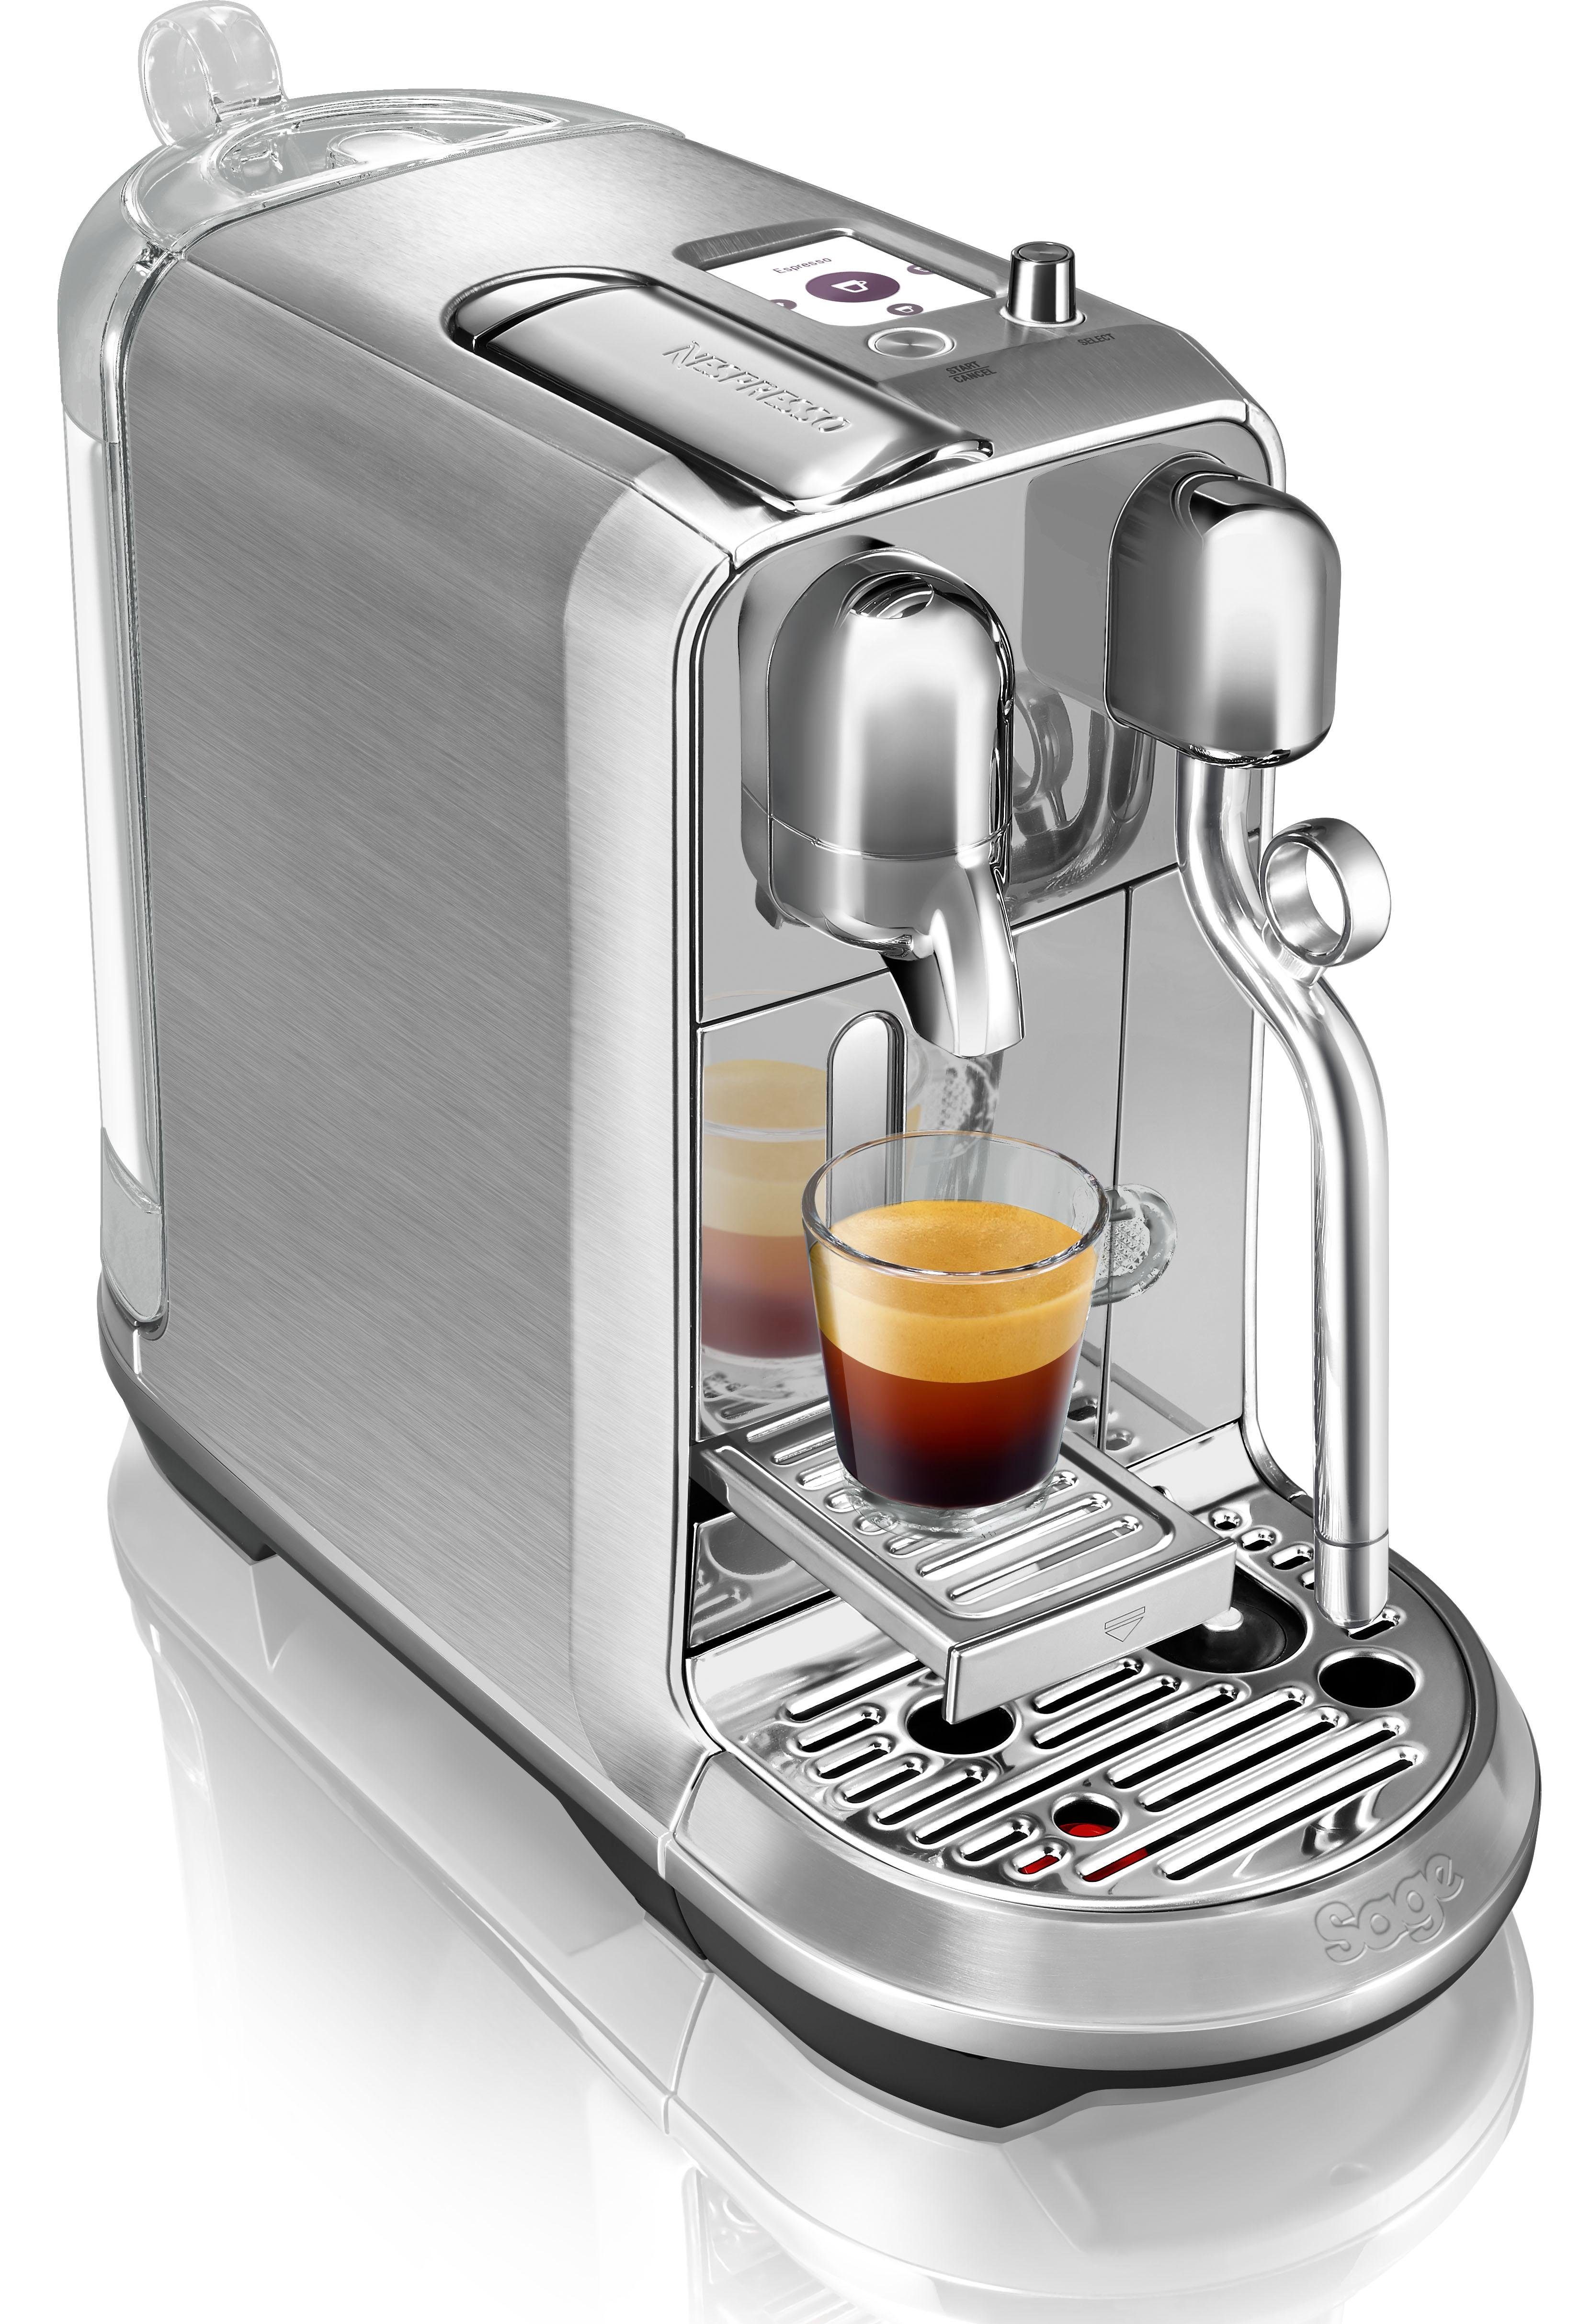 Nespresso Kapselmaschine Creatista Plus SNE800 mit Edelstahl-Milchkanne, inkl. Willkommenspaket mit 14 Kapseln | Kapselmaschinen